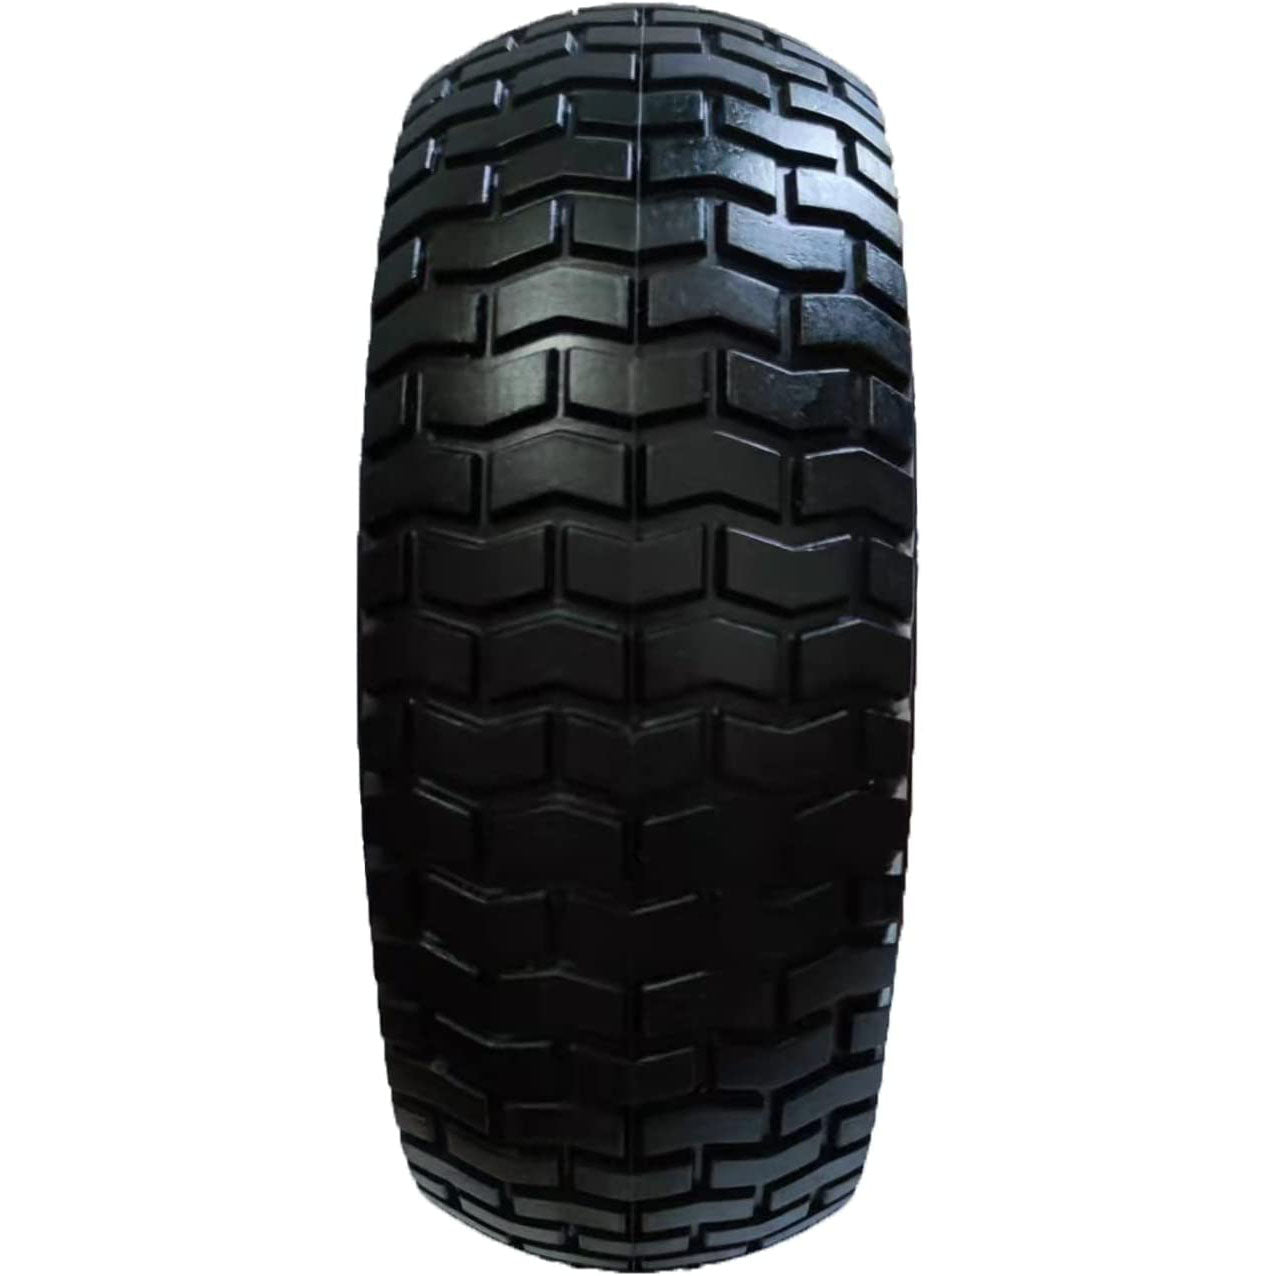 Flat Free Lawn Mower Tire 13x5.00-6, 3/4 & 5/8 Bearings, 3" Hub - RelaxHome